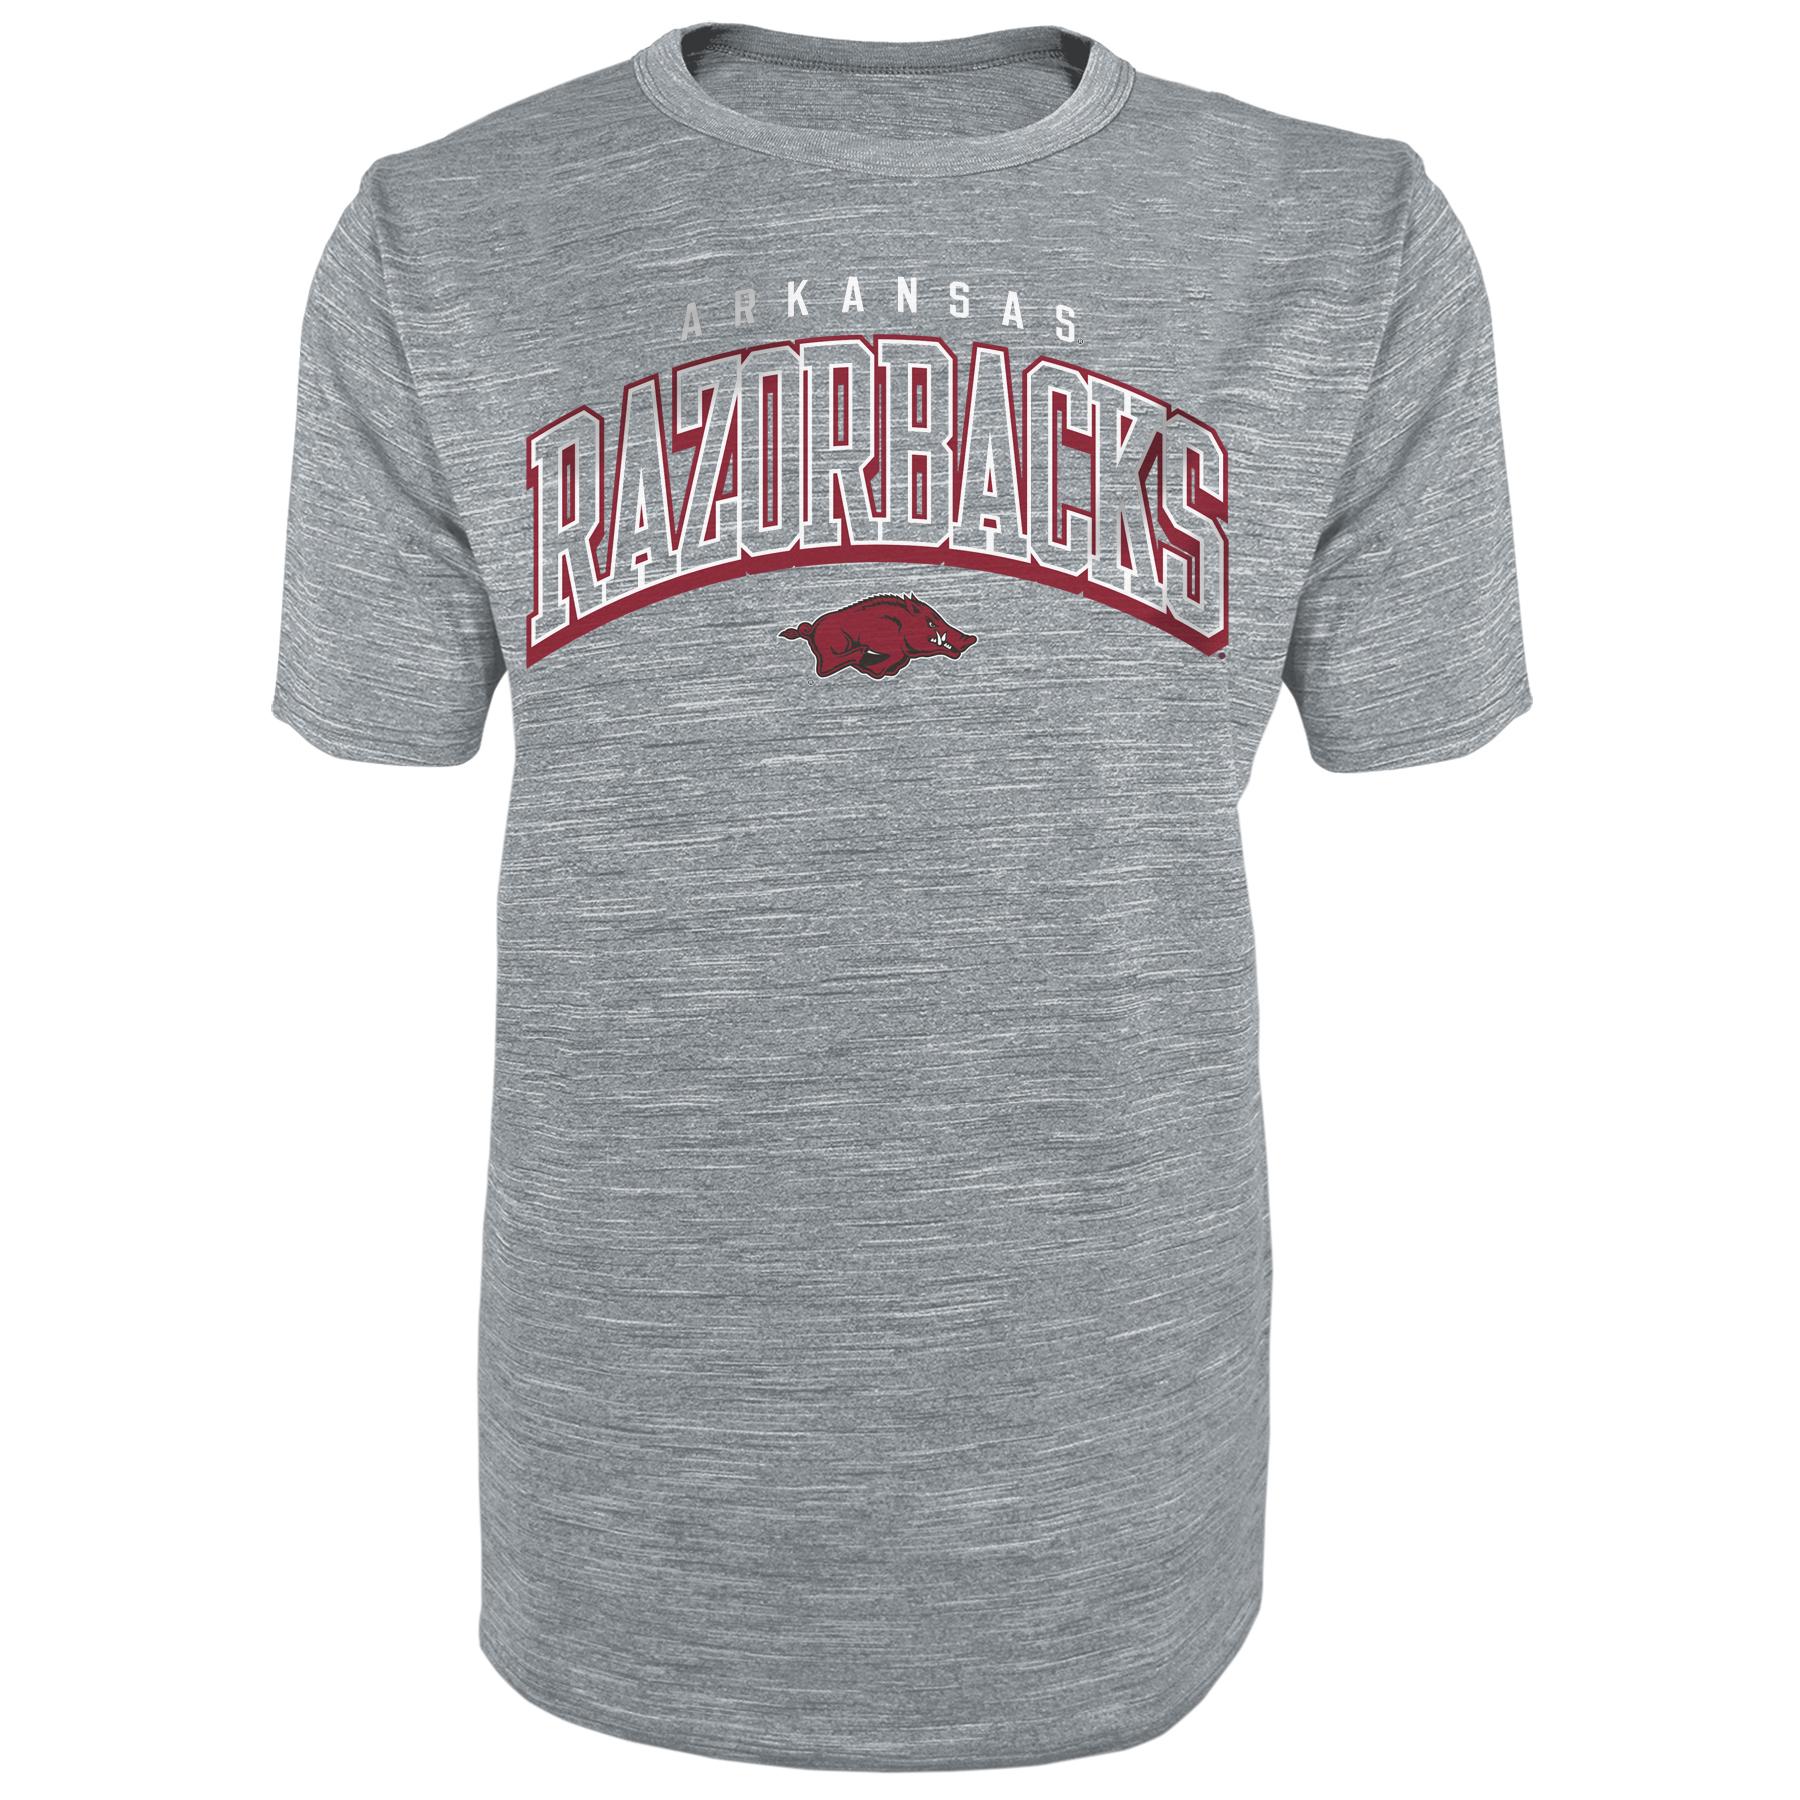 NCAA Men's Big & Tall Graphic T-Shirt - Arkansas Razorbacks